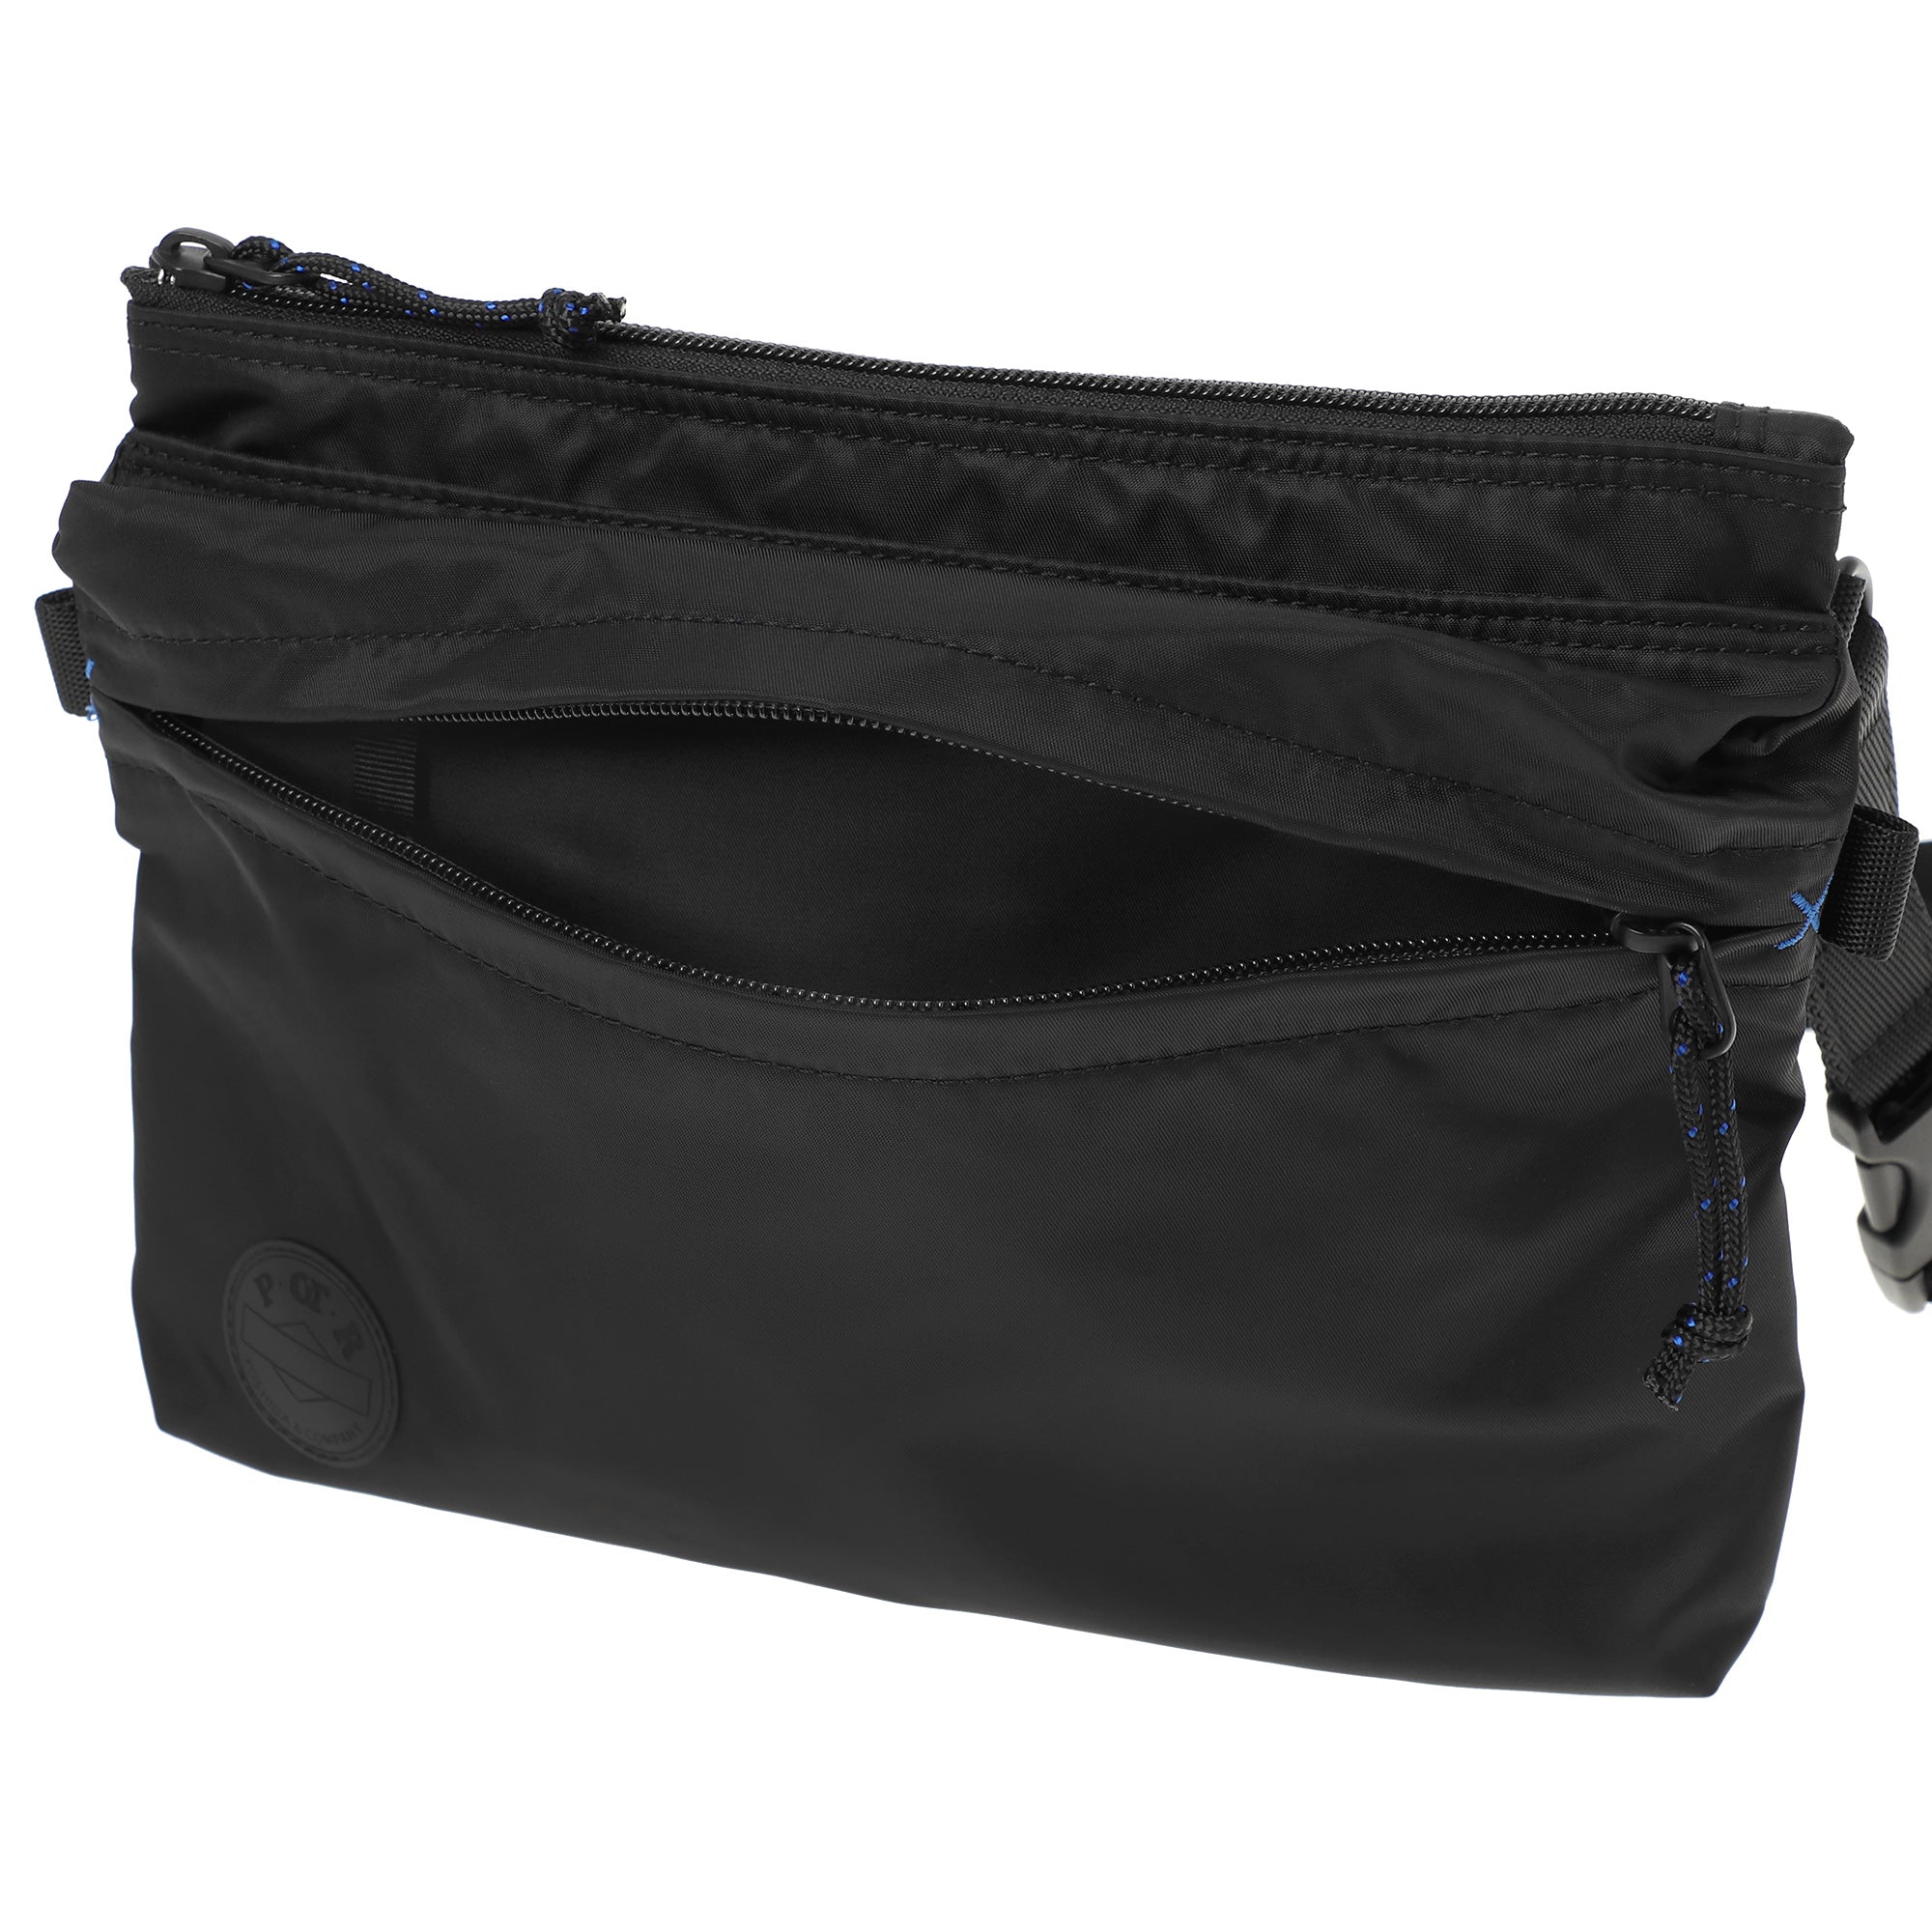 POTR - Packs Strool Bag - (Black) view 3